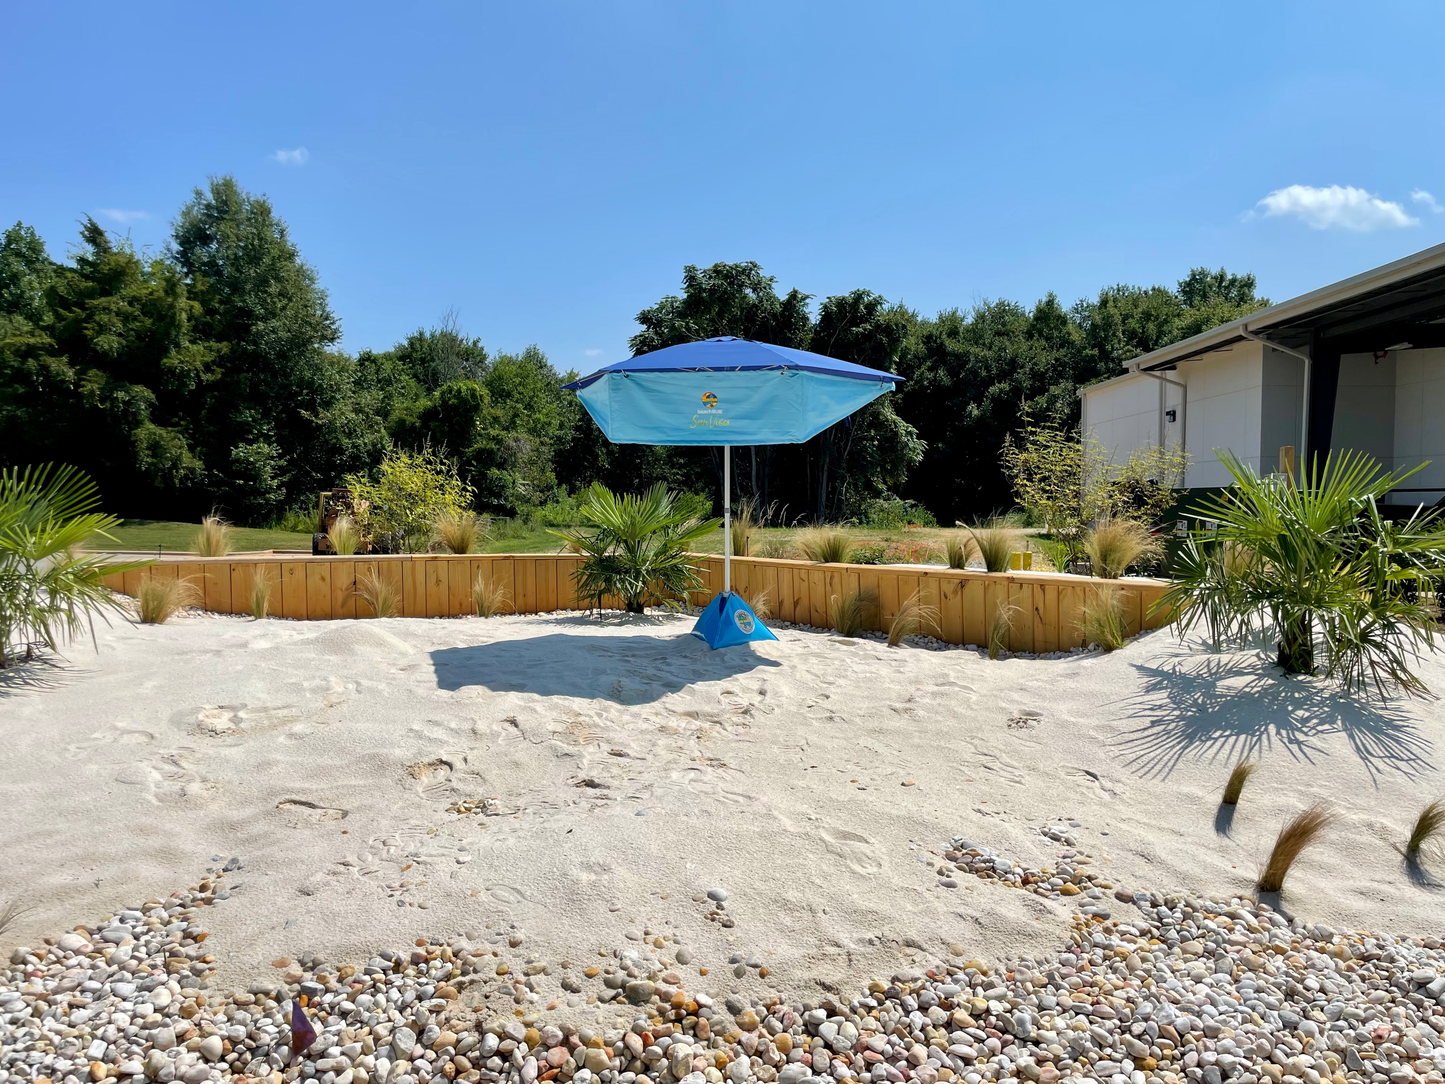 beachBUB® SunVisor - The Future of Tilting Beach Umbrellas